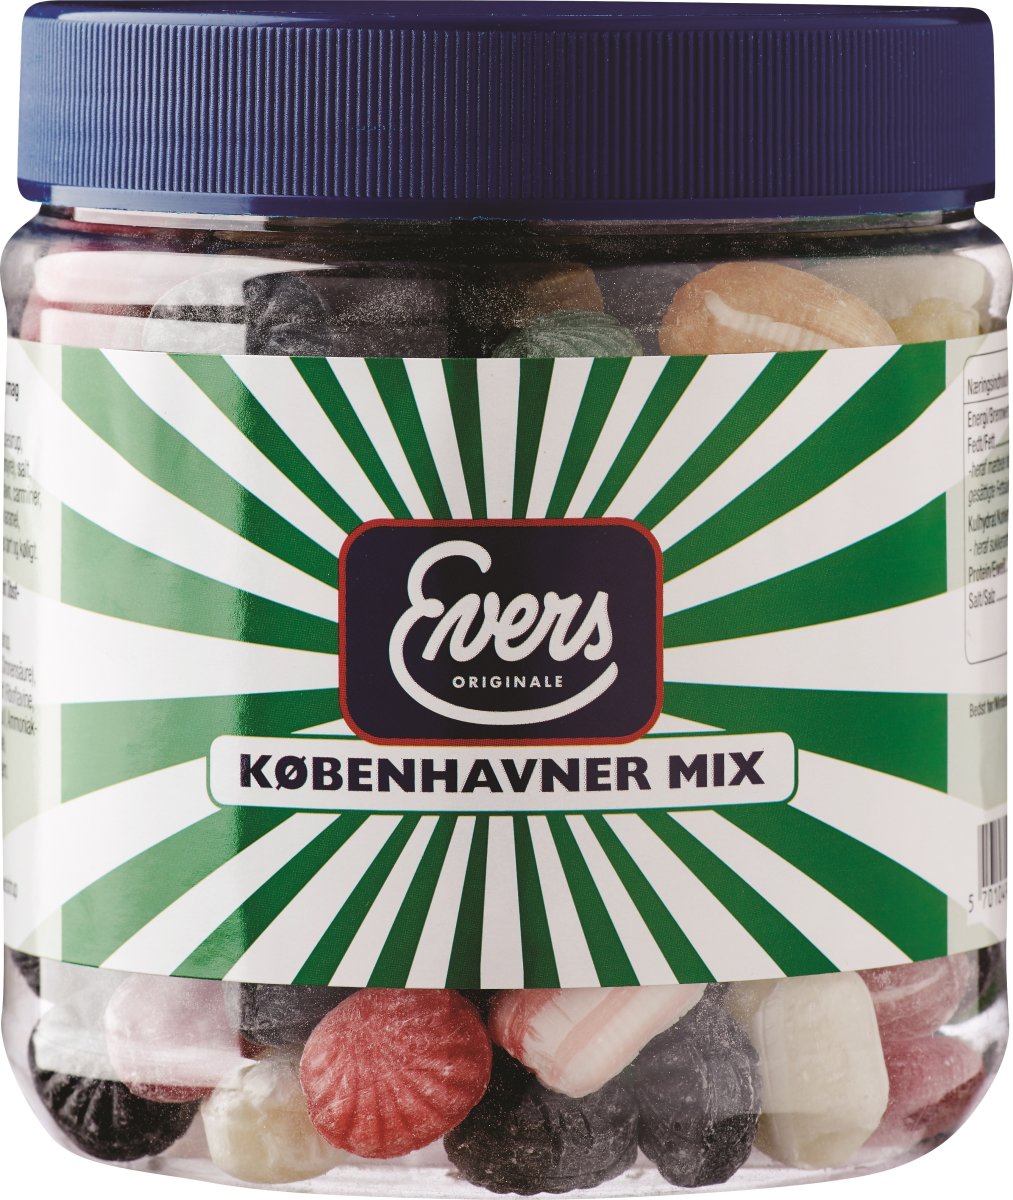 Evers Københavnermix bolcher, 1000g